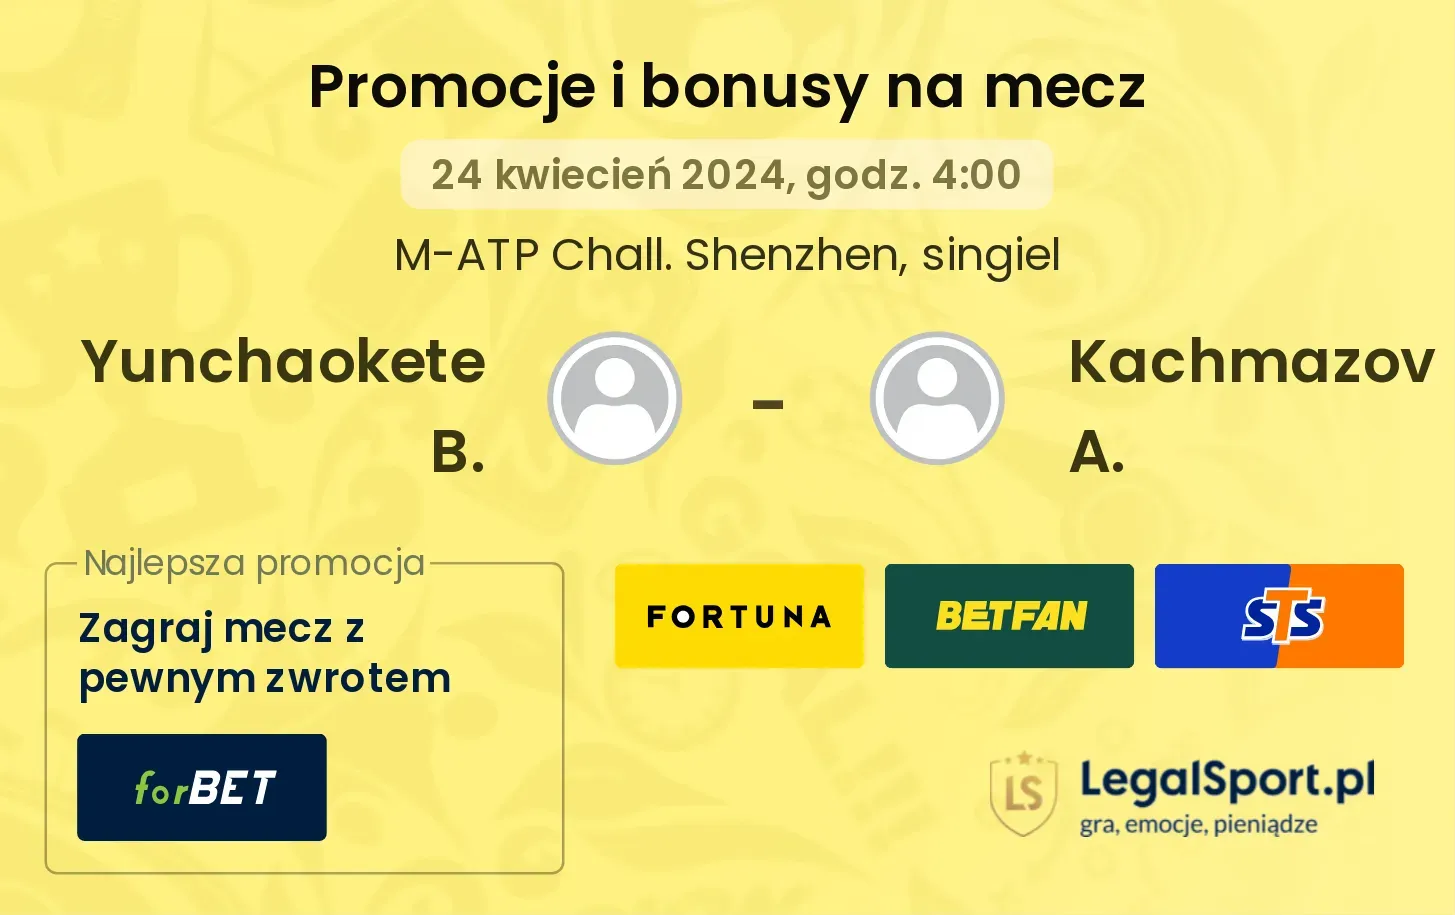 Yunchaokete B. - Kachmazov A. promocje bonusy na mecz